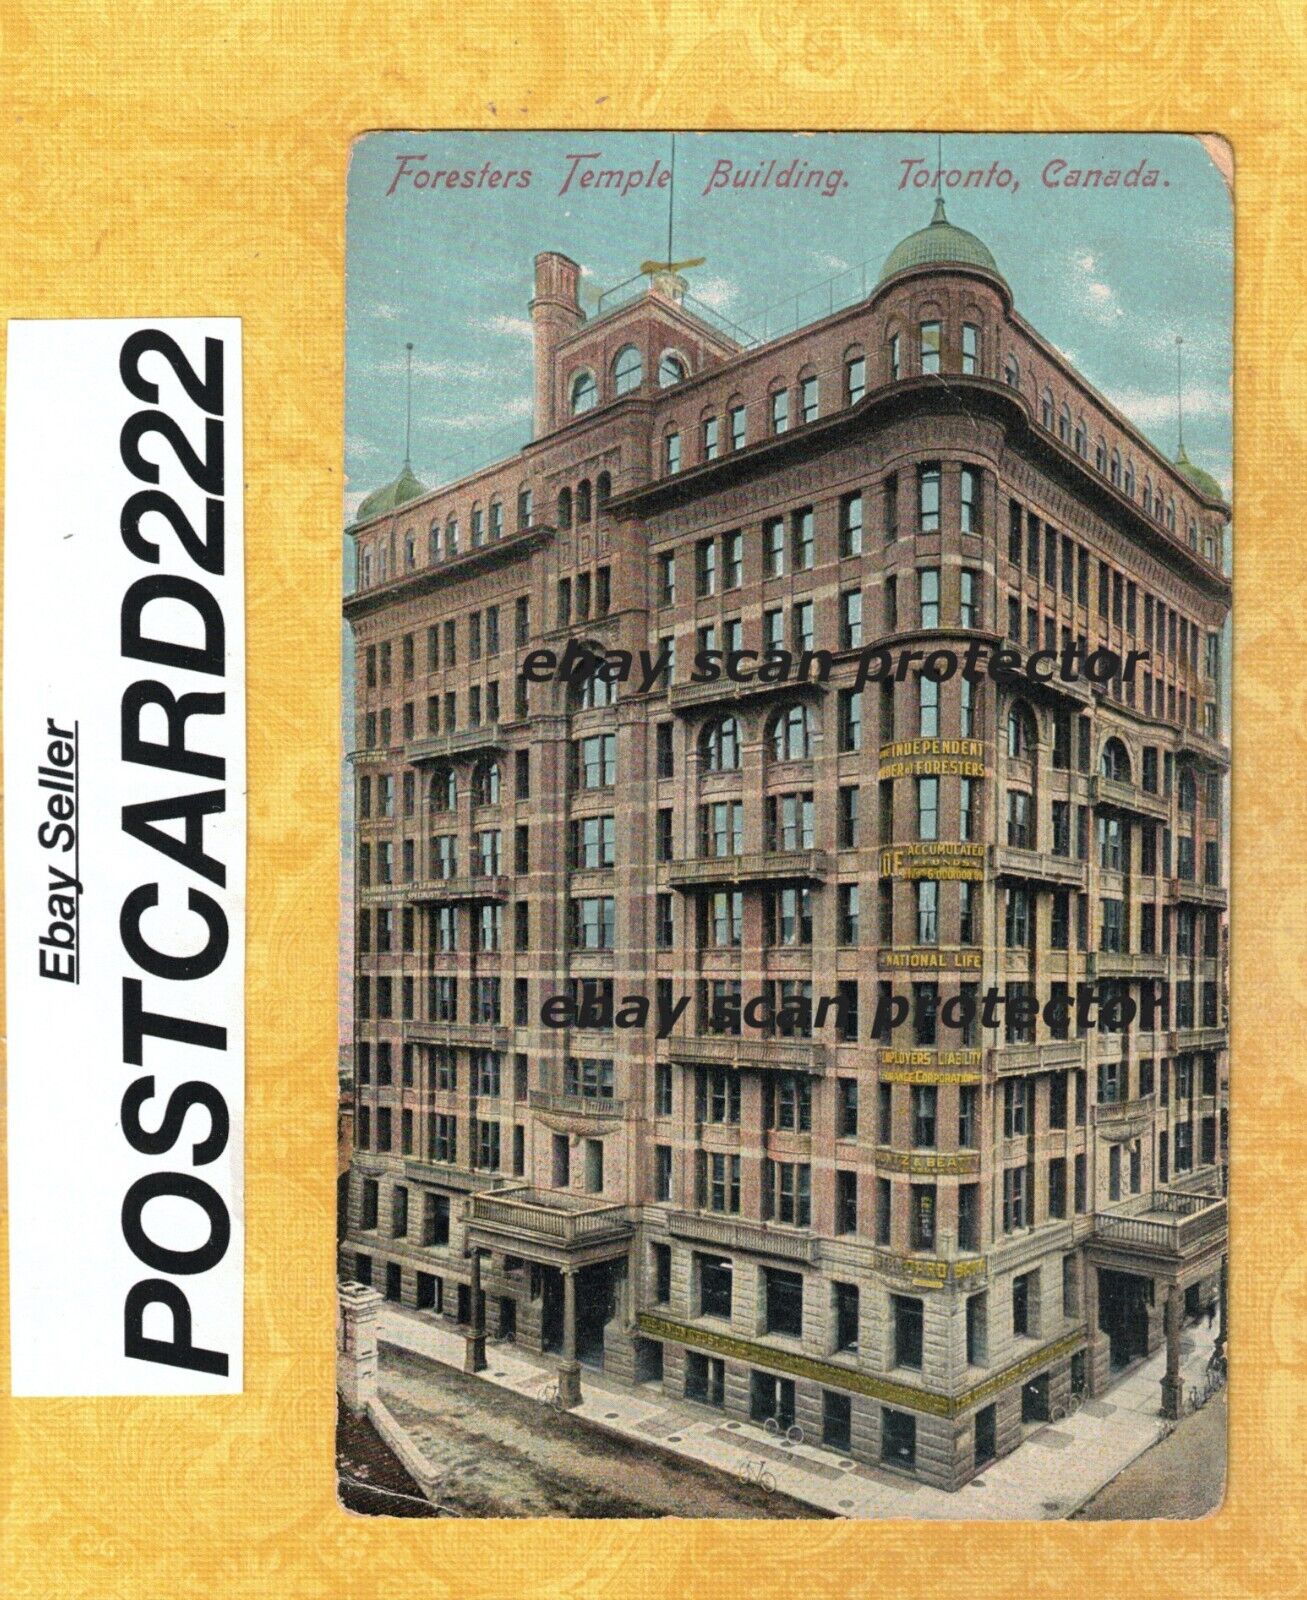 X Canada Ontario Toronto 1908-29 vintage postcard FORESTERS TEMPLE building